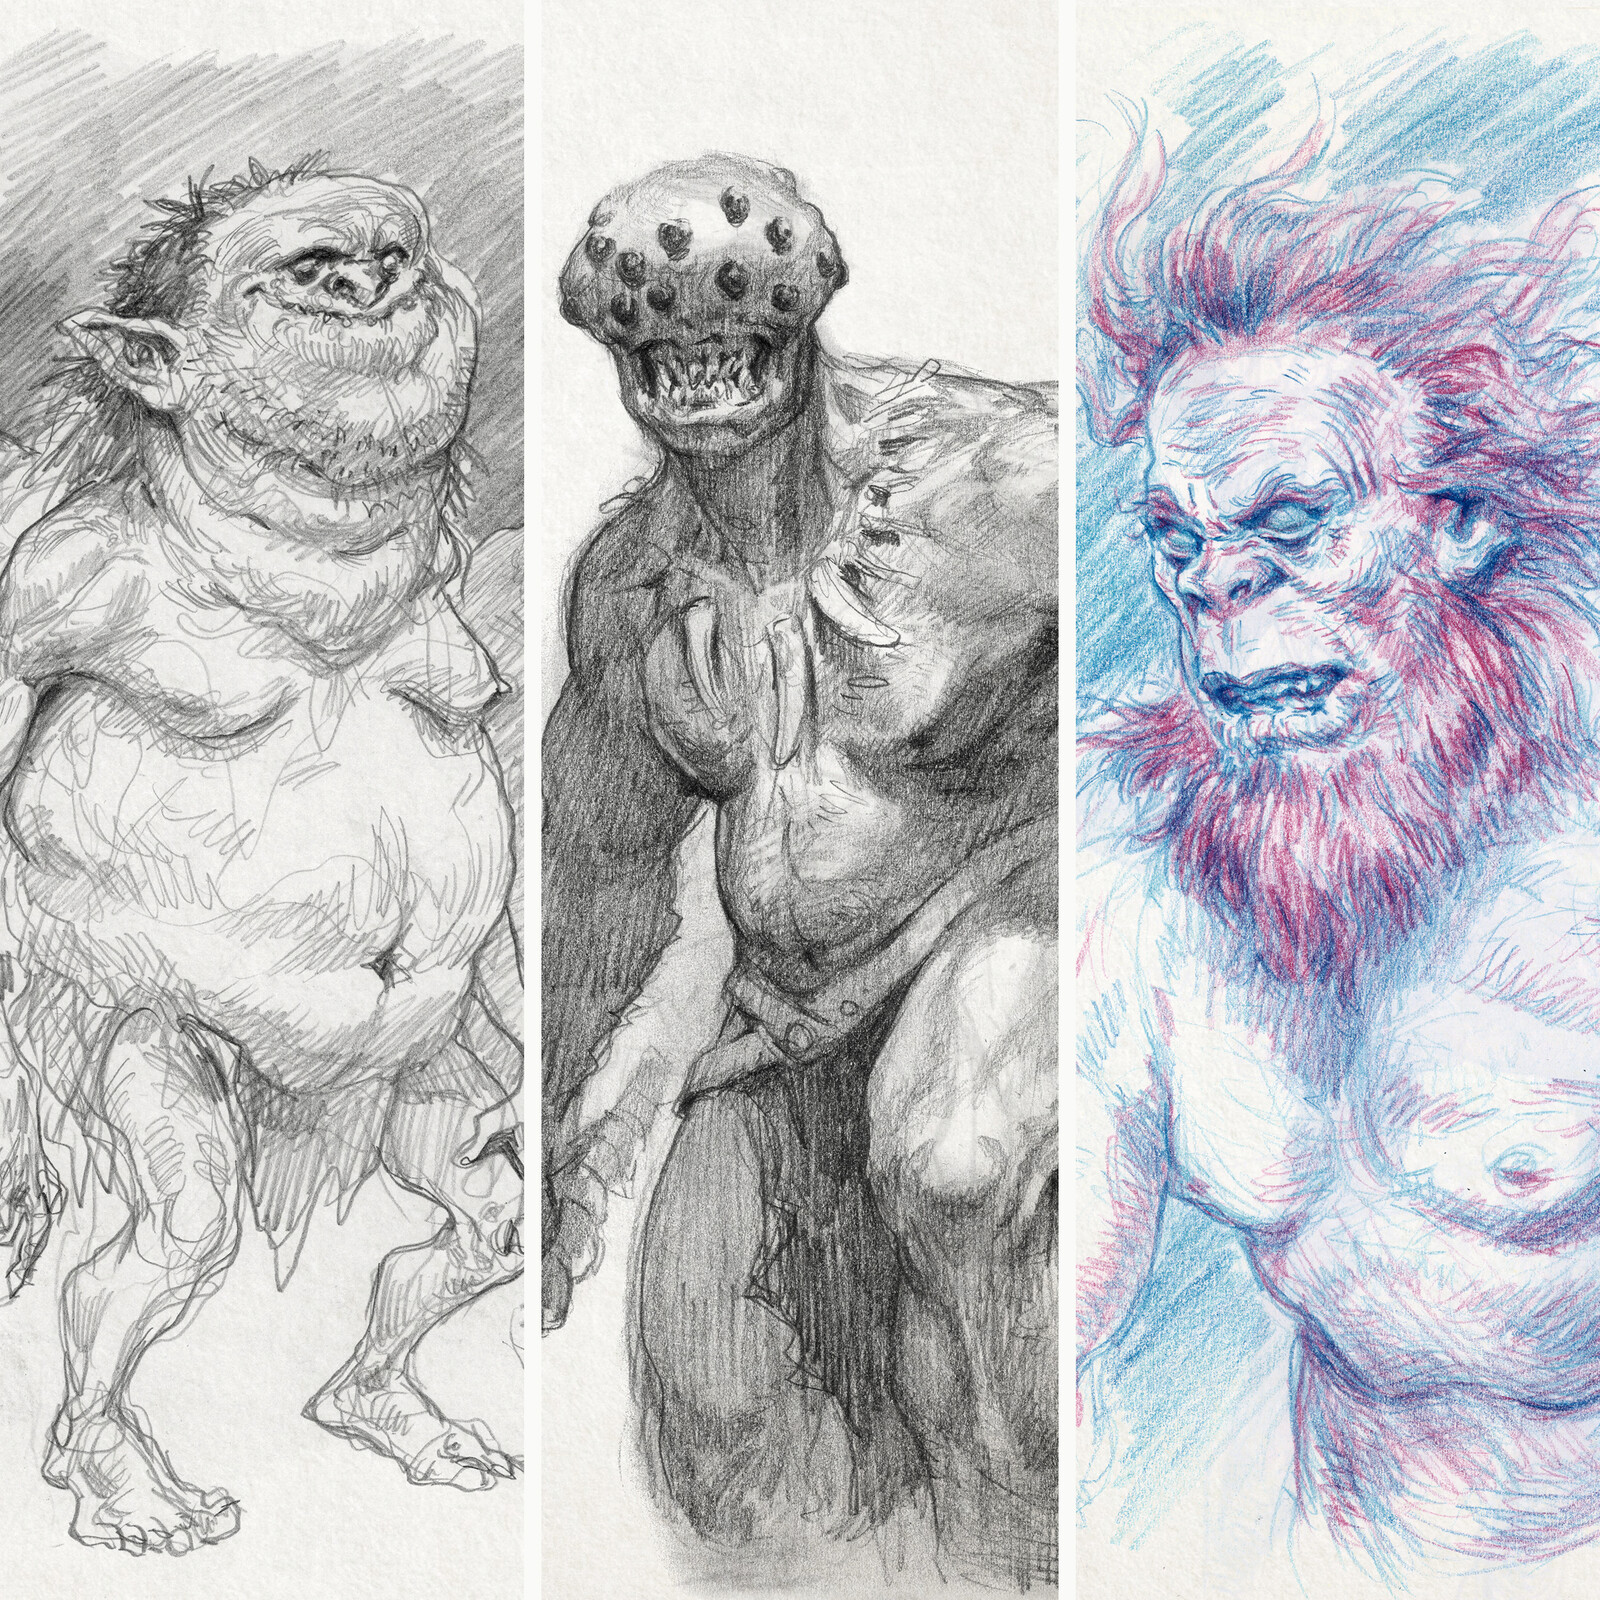 Sketchbook: The Troll Cave